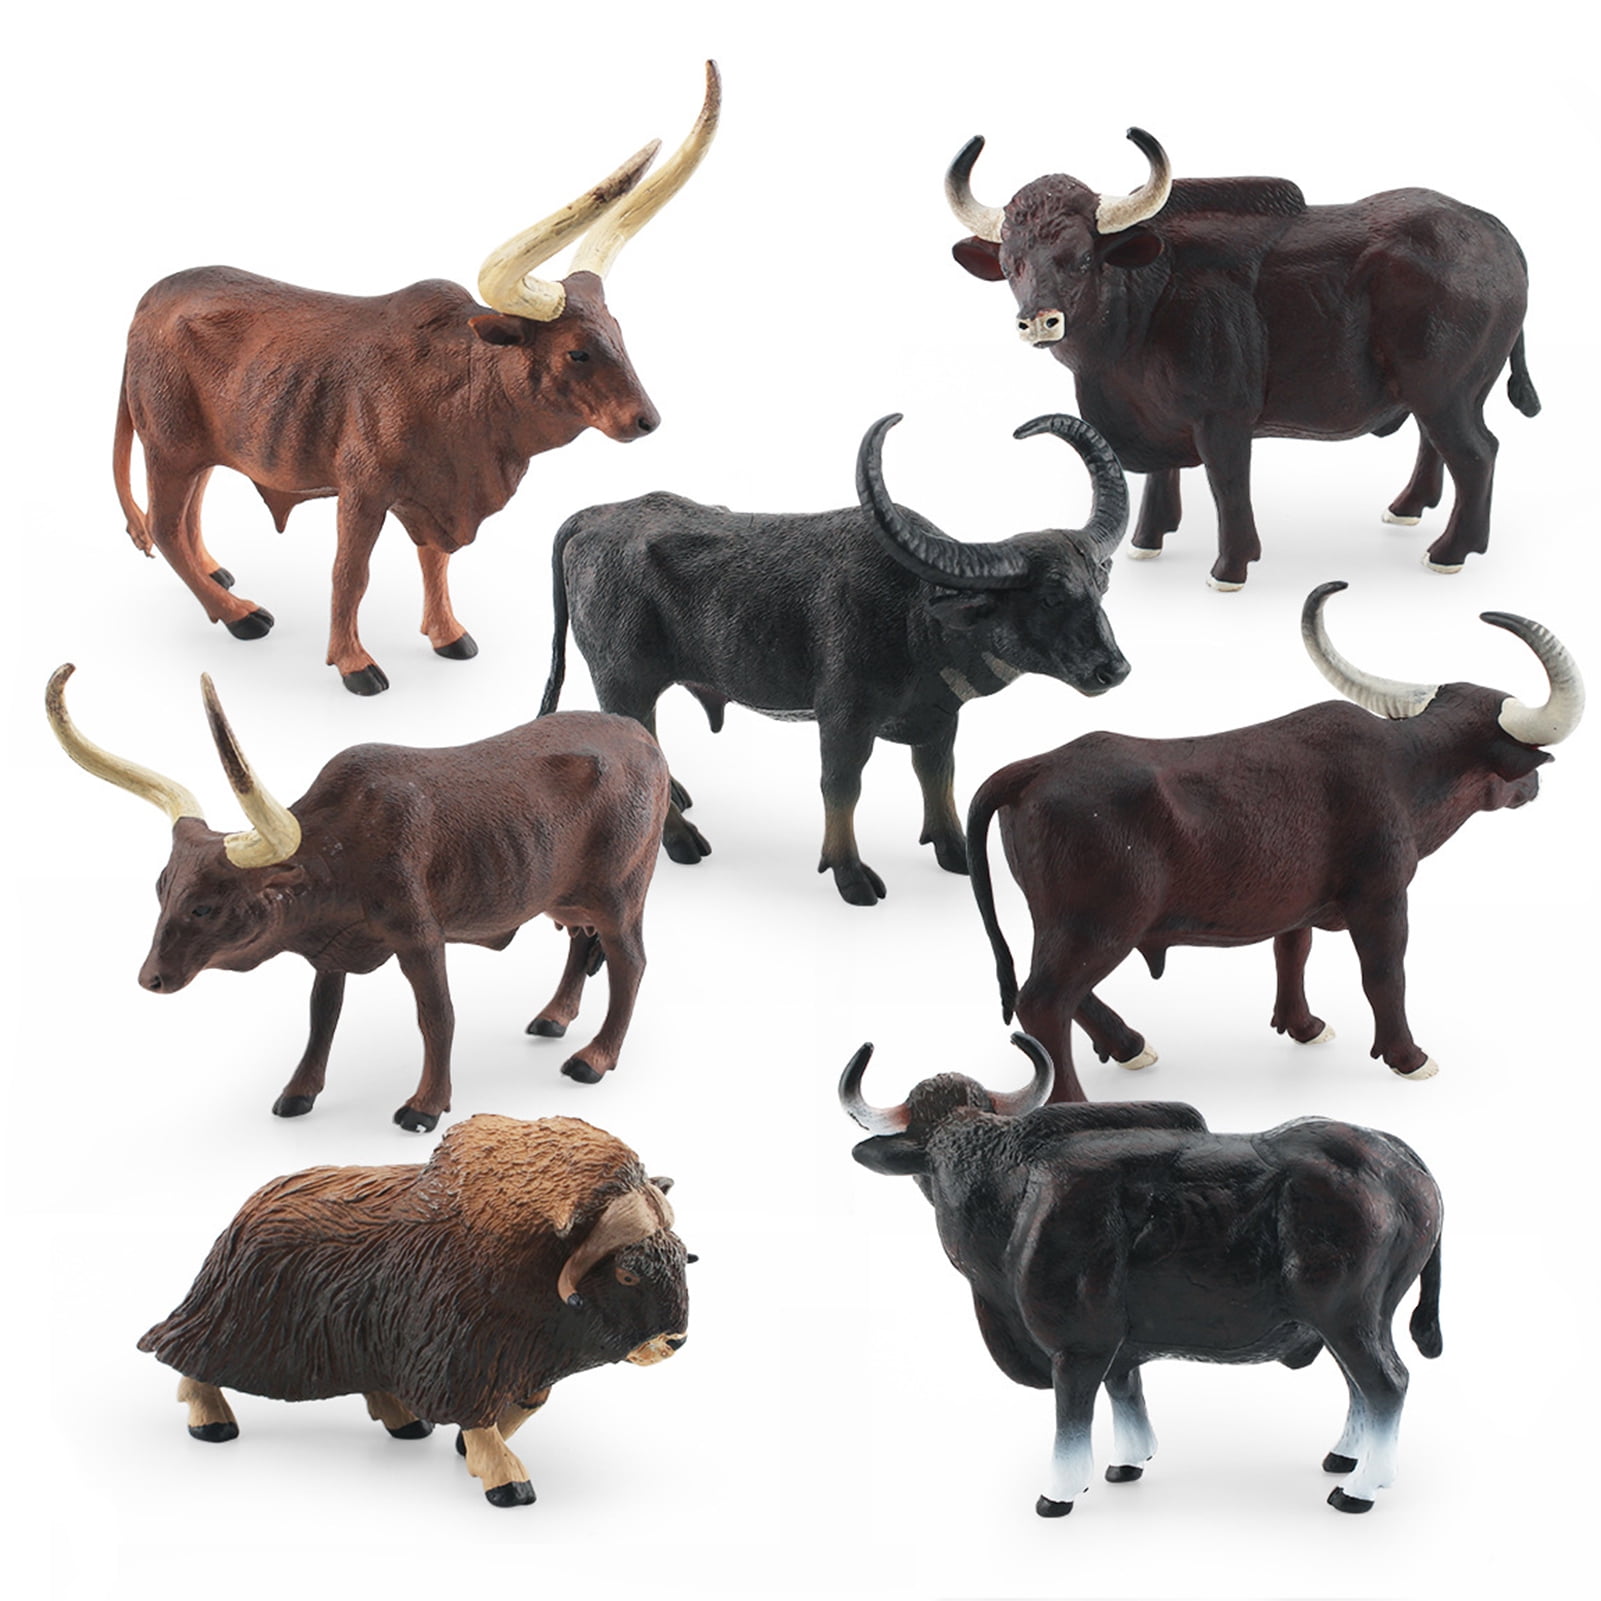 Hesroicy Cattle Figurine Realistic